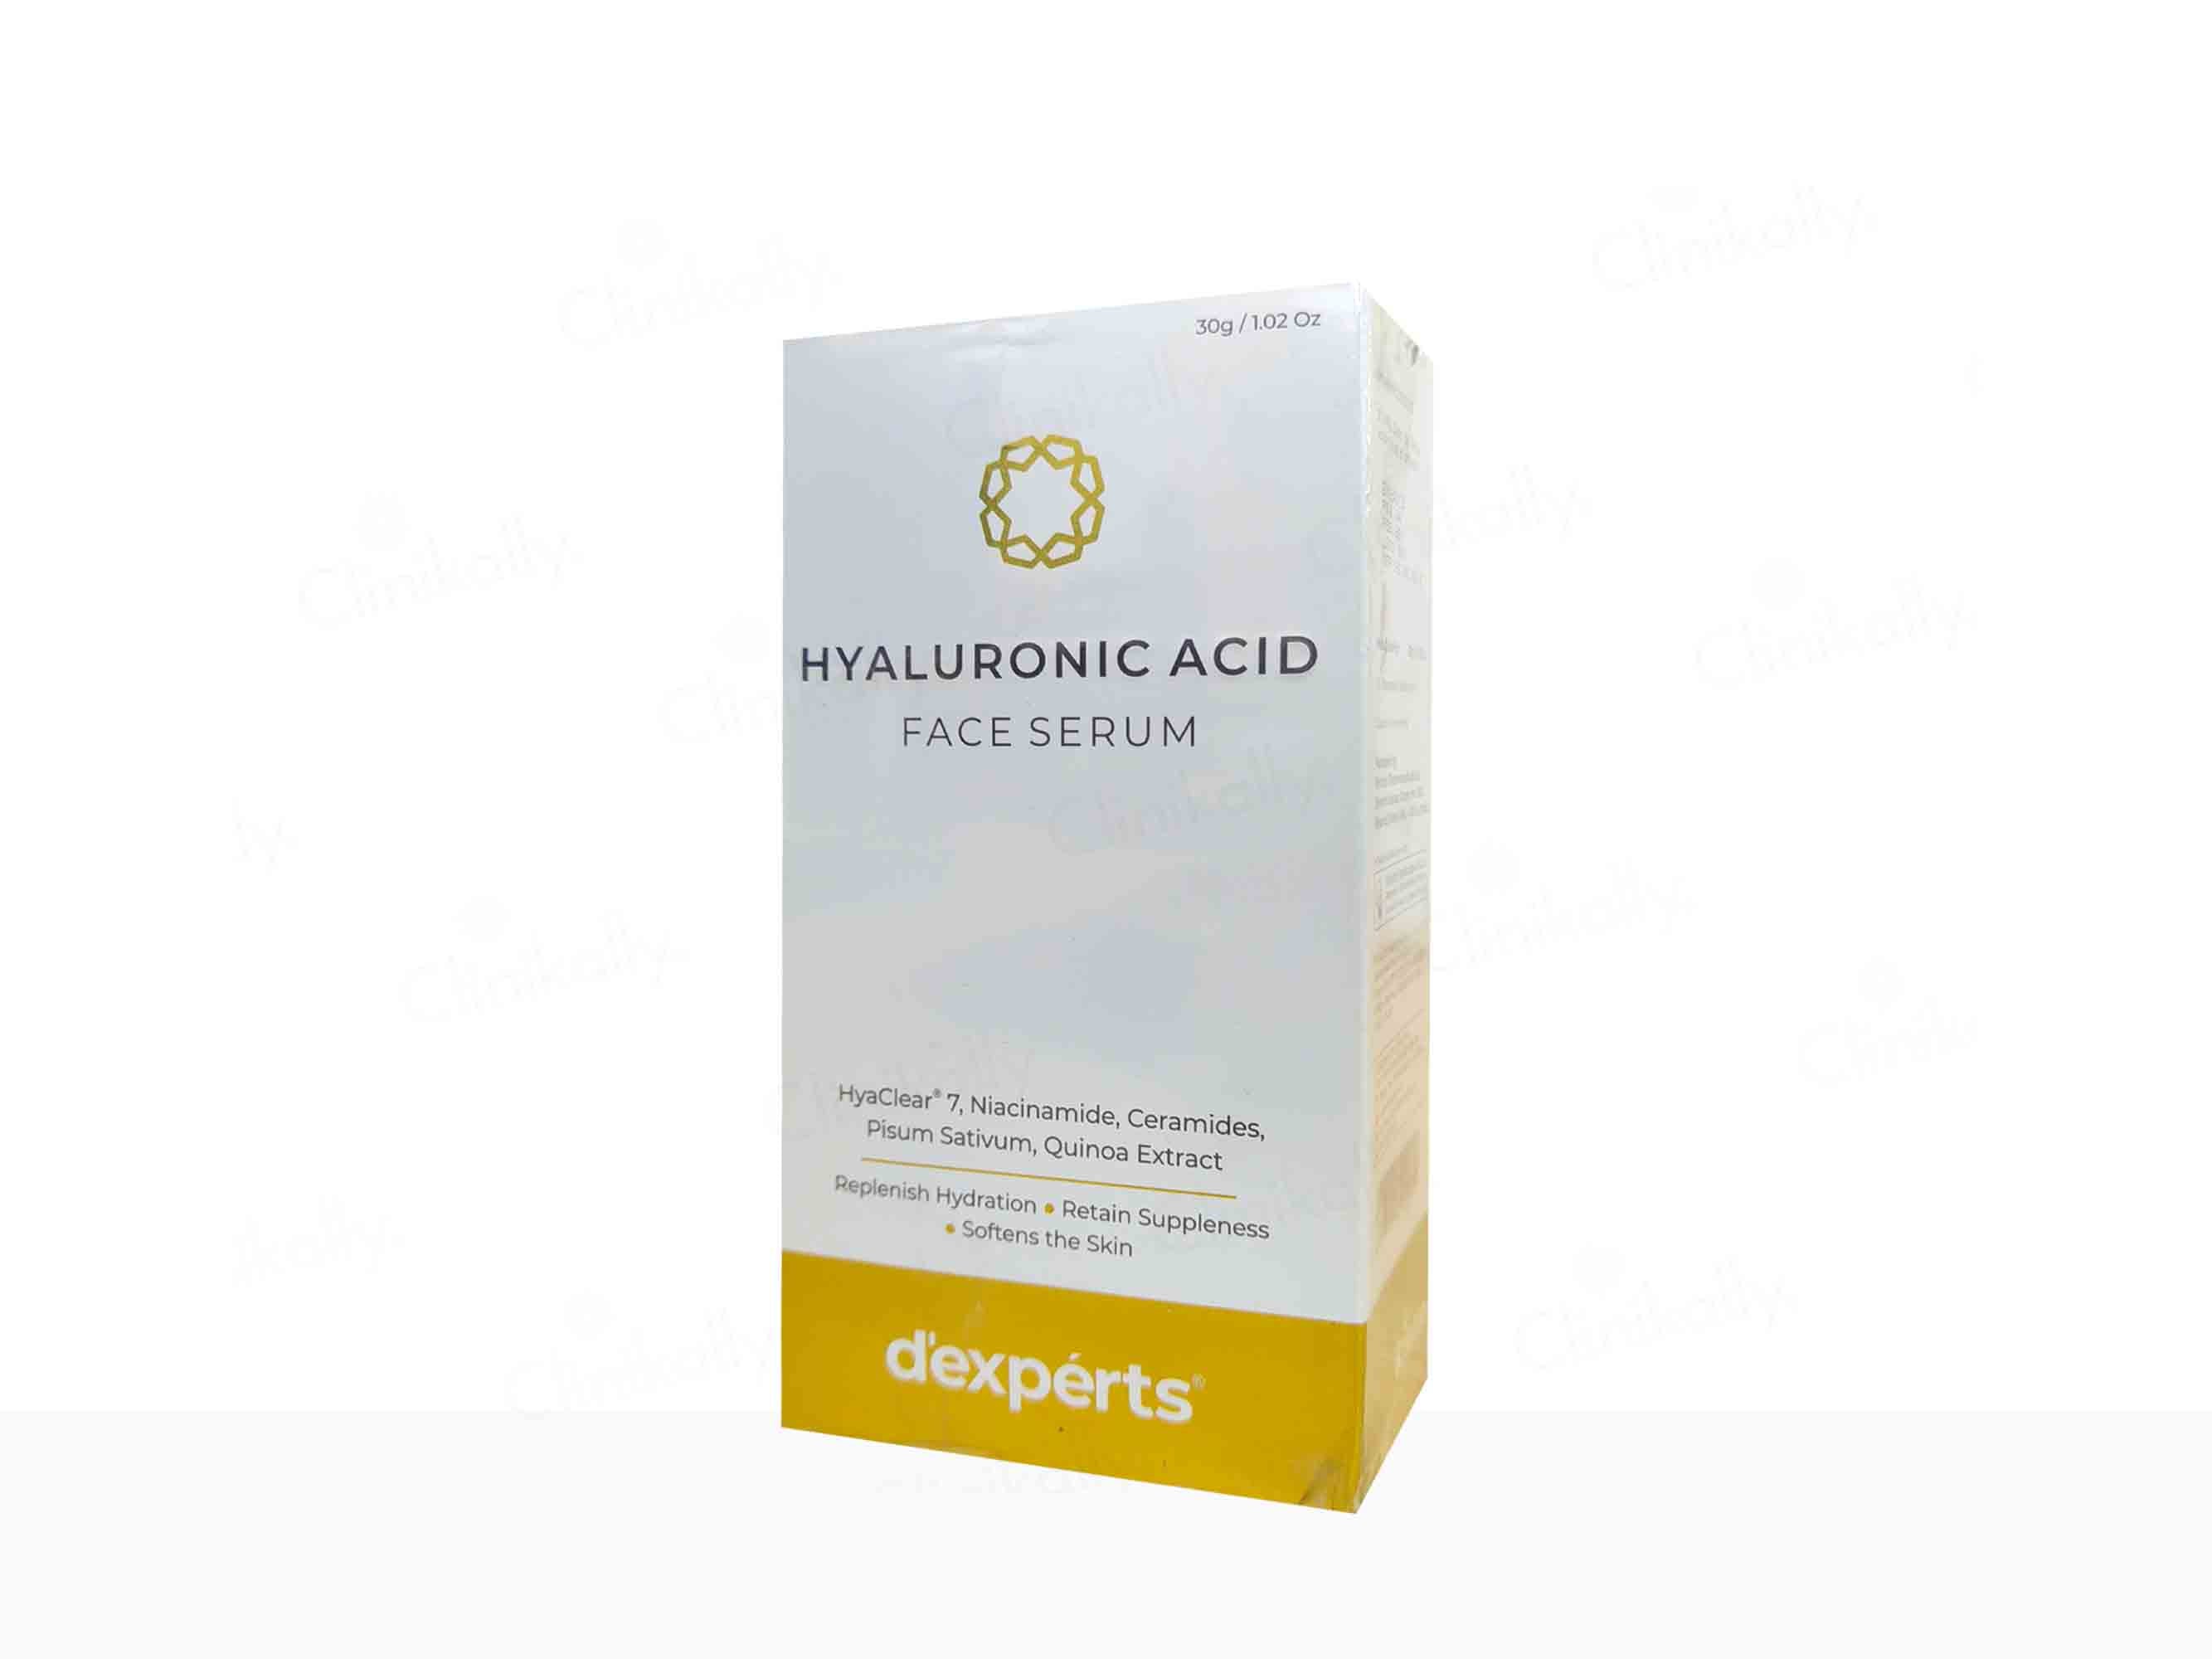 Brinton D'experts Hyaluronic Acid Face Serum